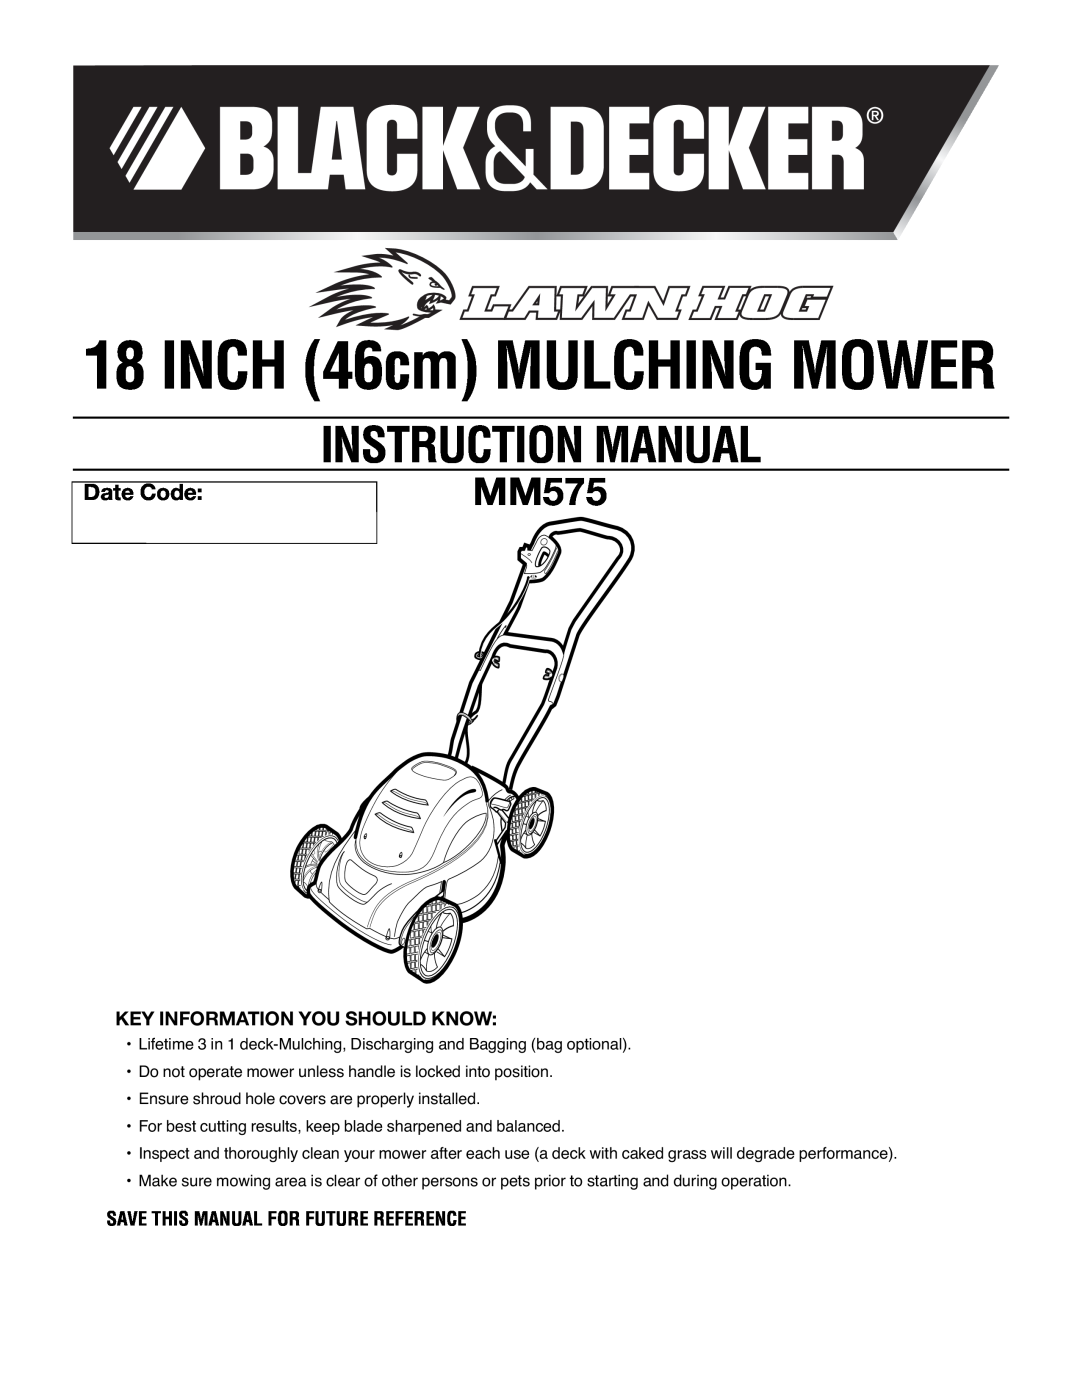 Black & Decker MM575 instruction manual Instruction Manual, Key Information You Should Know, 18” 46cm MULCHING MOWER 